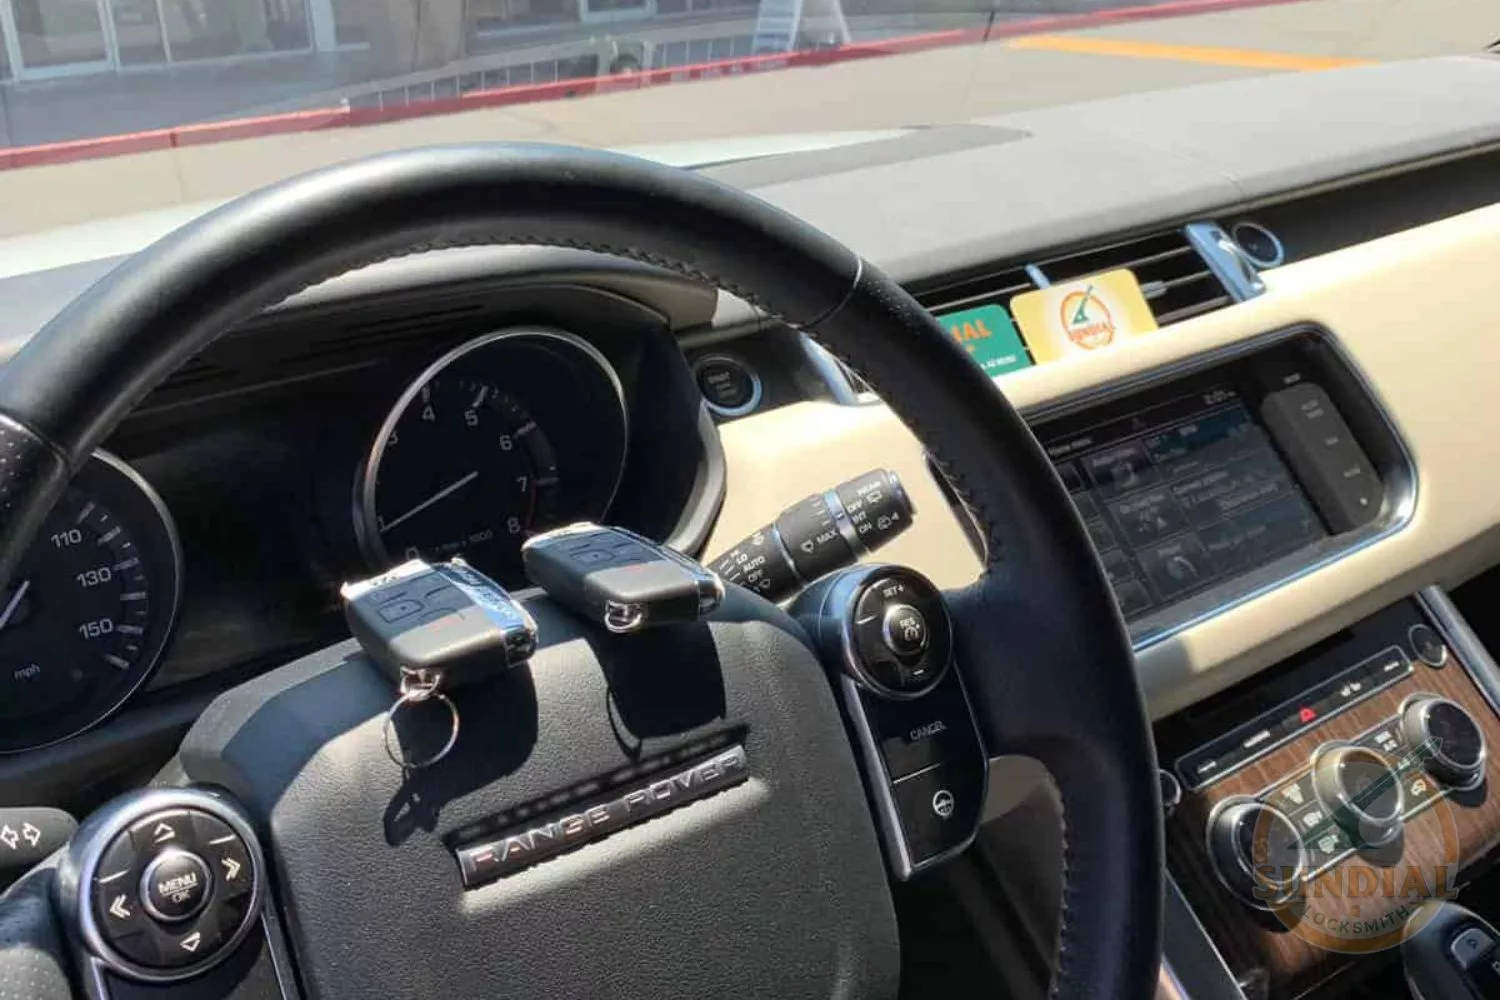 Range Rover interior, steering wheel, and dashboard.